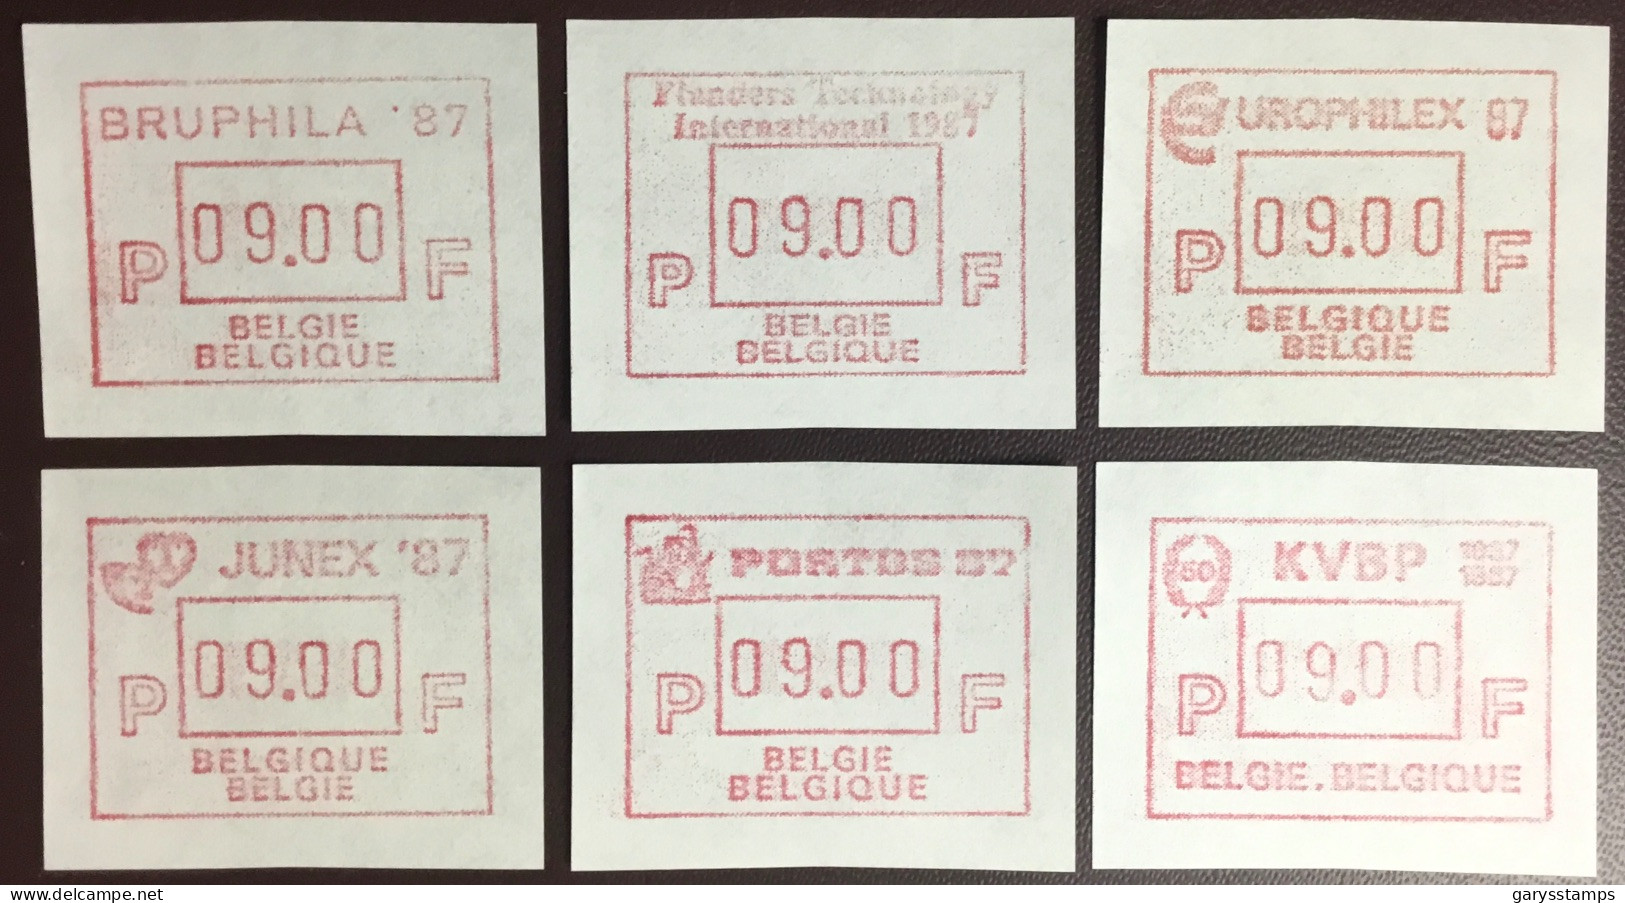 Belgium 1987 ATM Machine Stamps MNH - Postfris